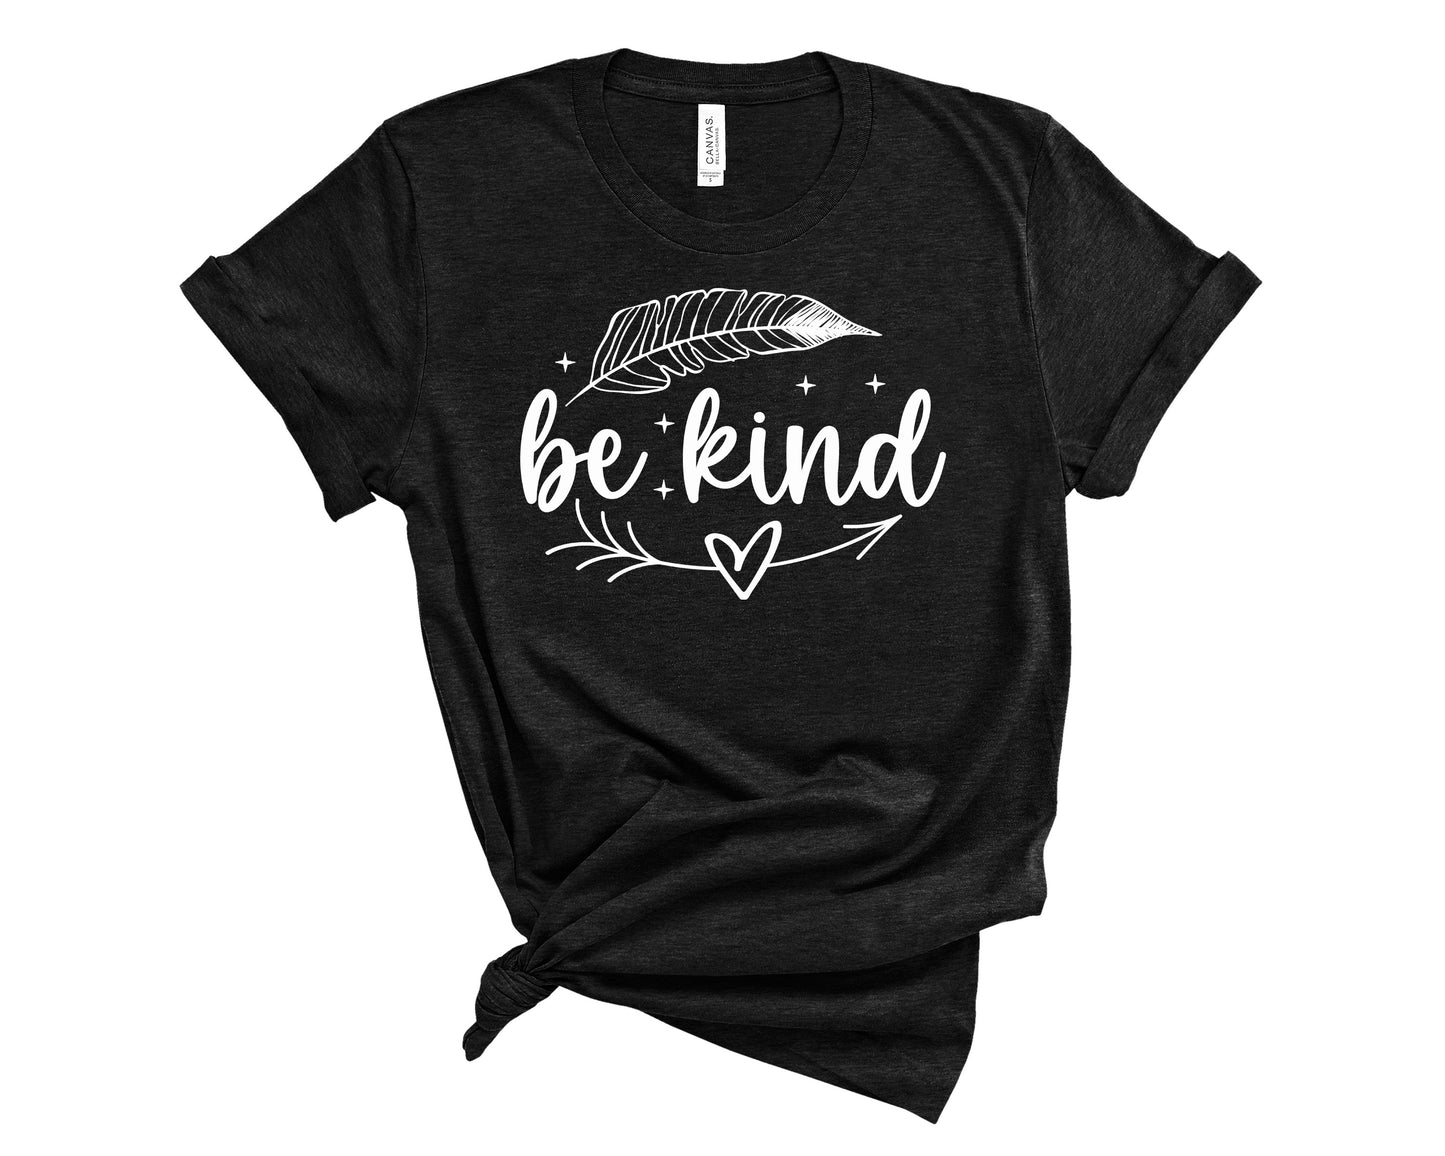 kindness shirt